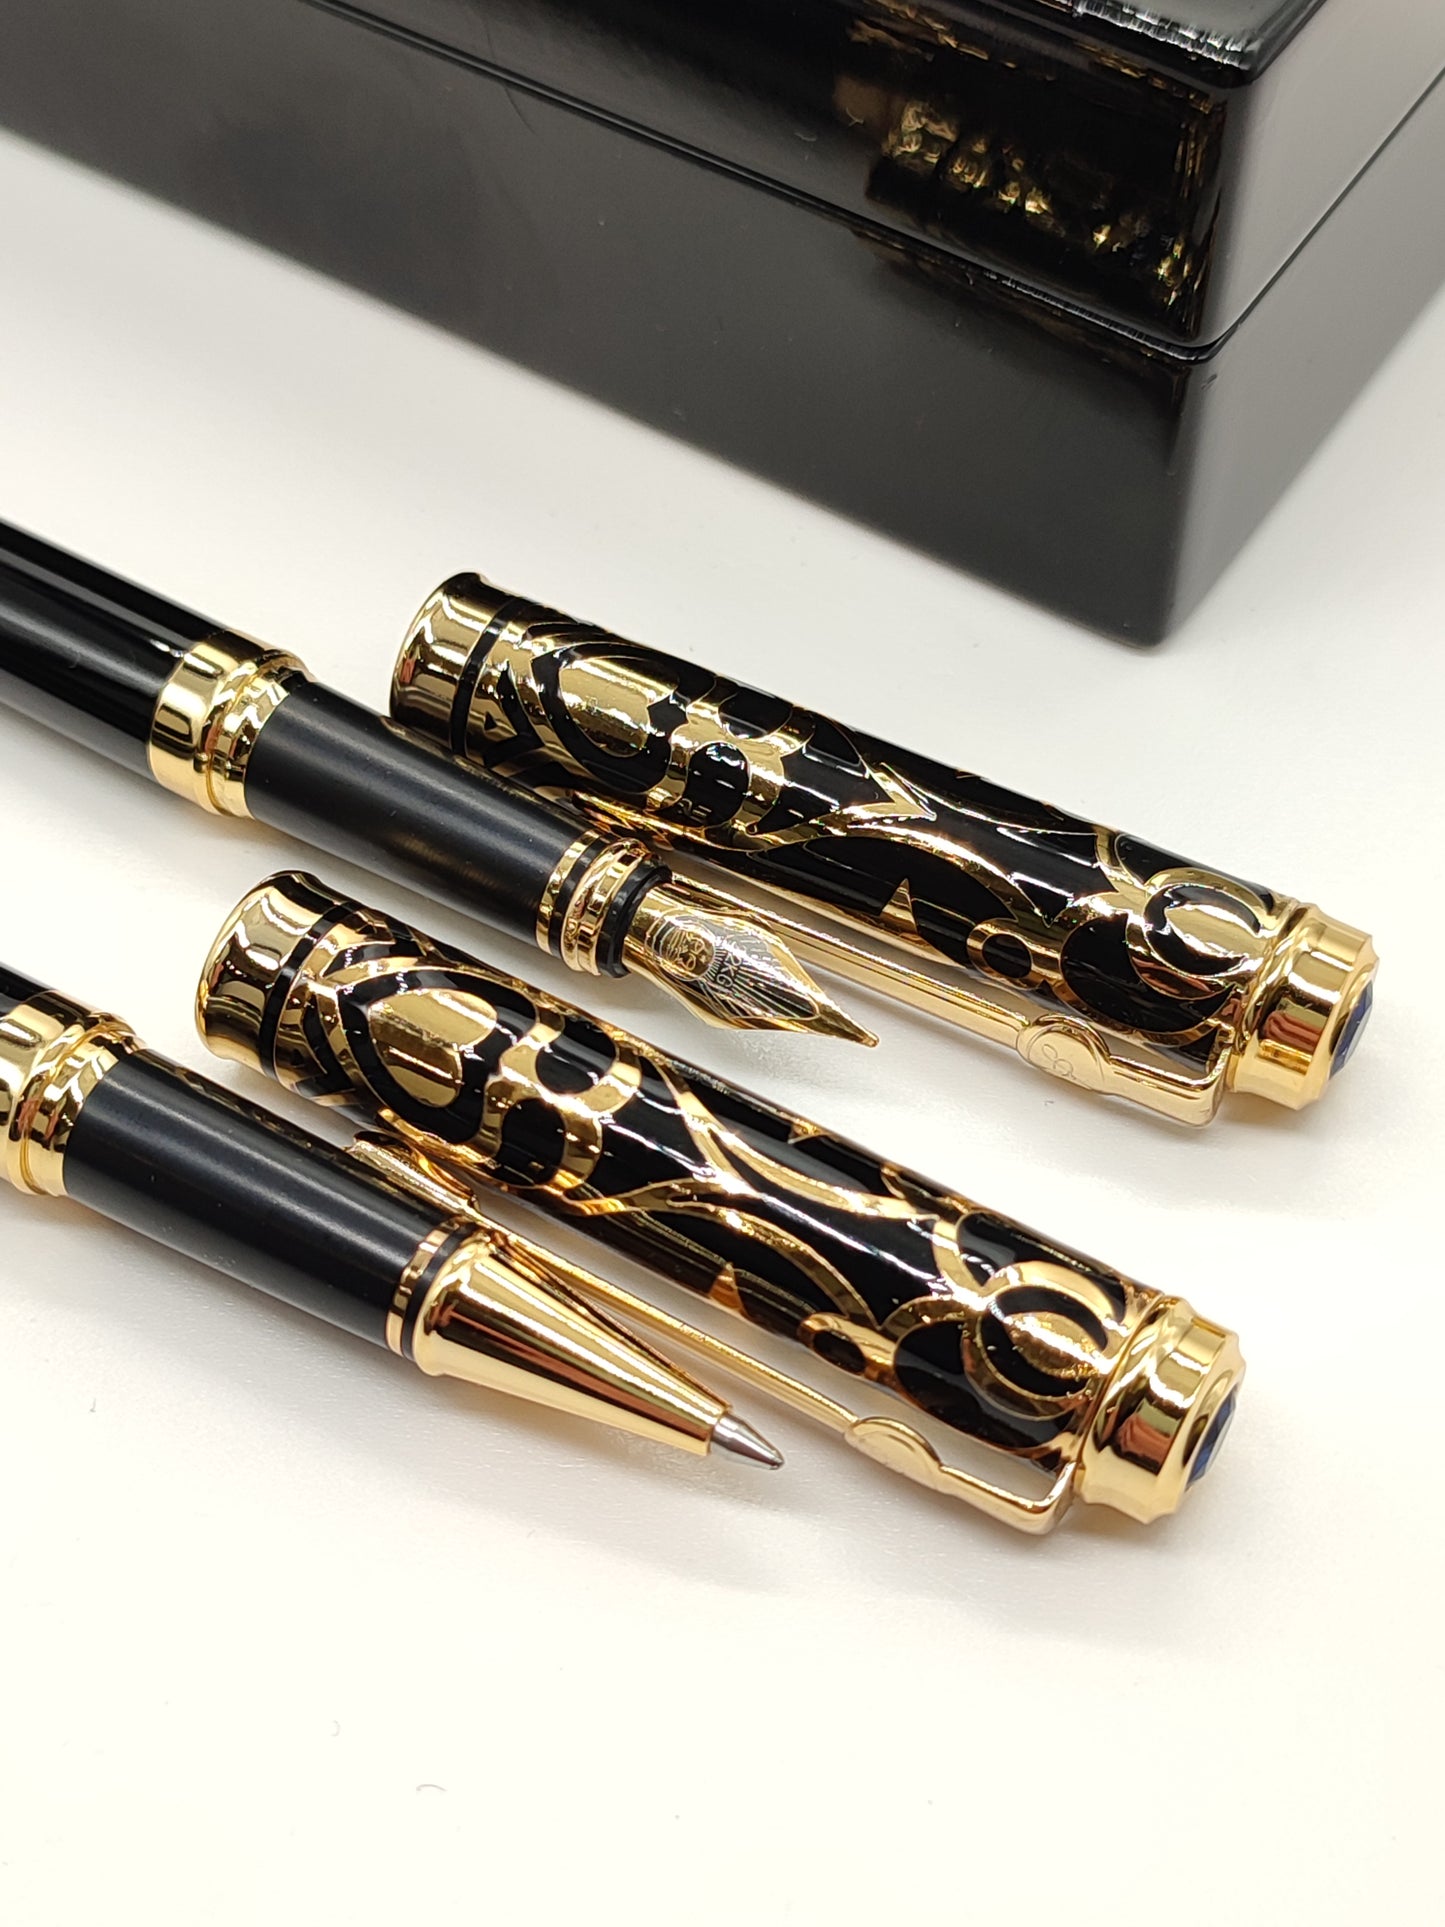 Golden Duke pen set with sapphire